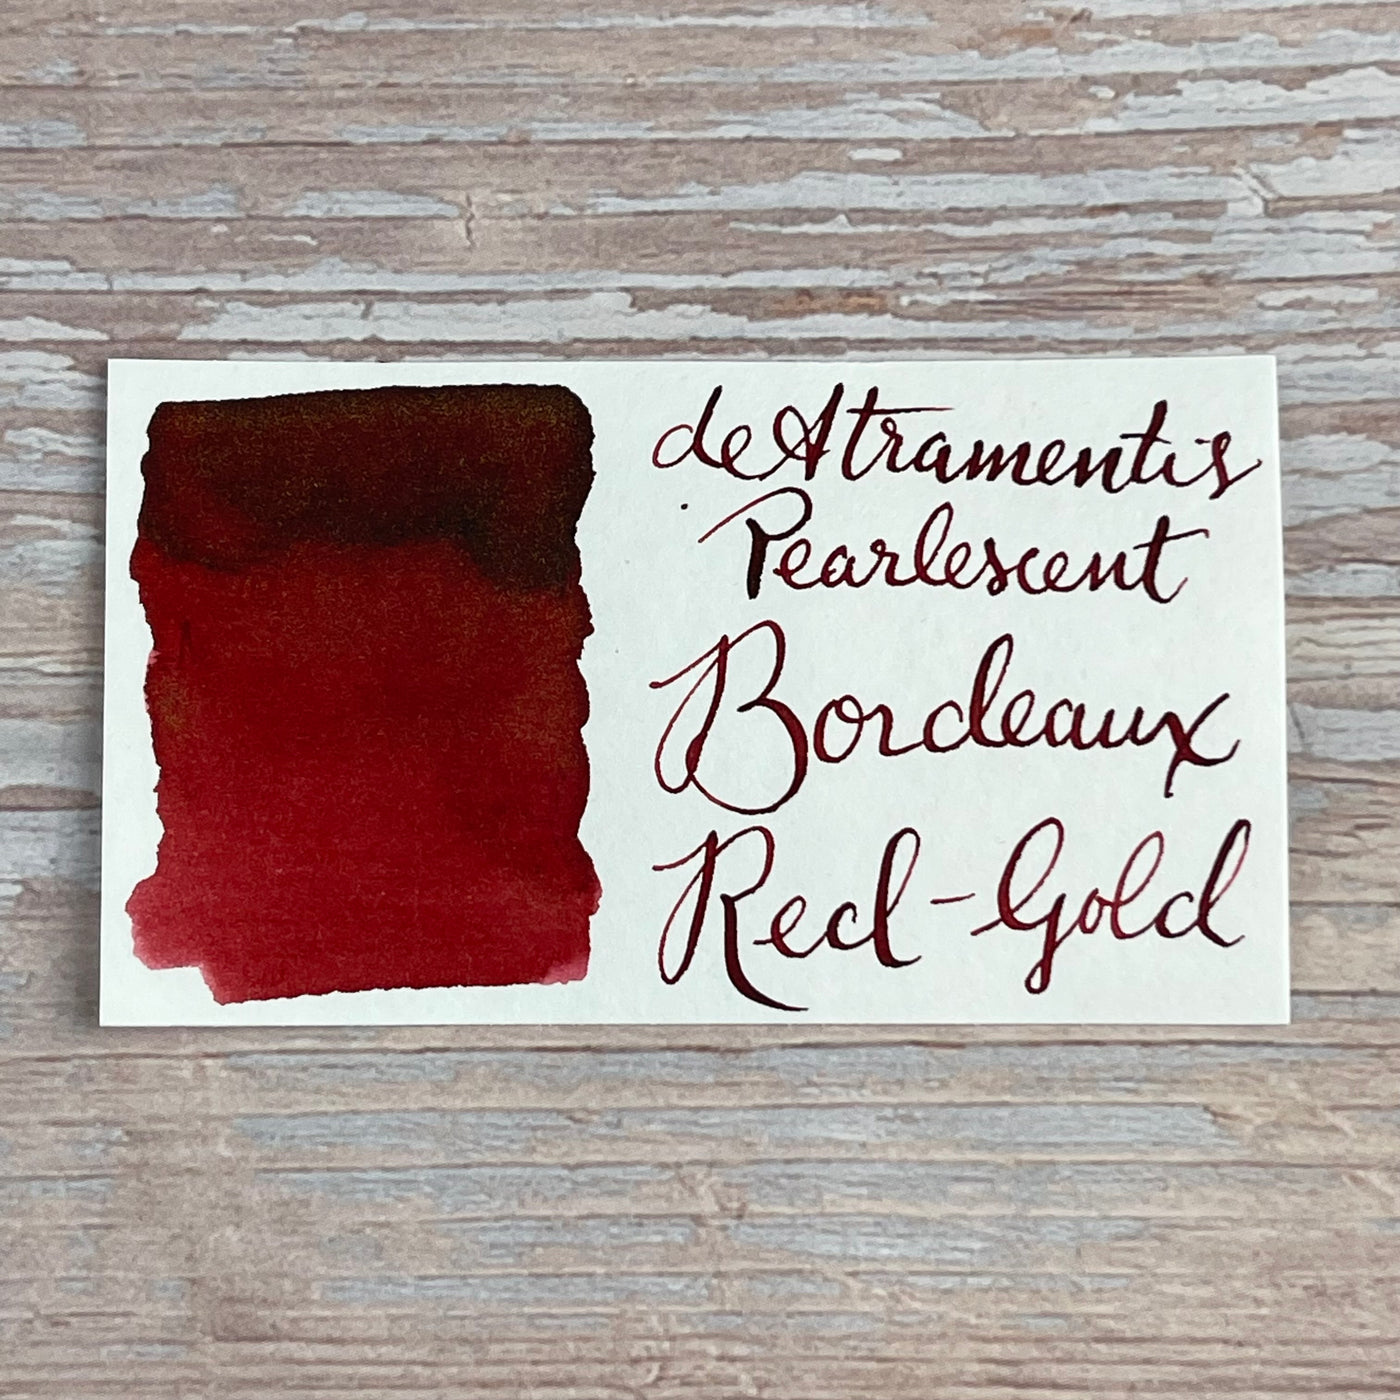 De Atramentis Pearlescent Bordeaux Red Gold - 45ml Bottled ink